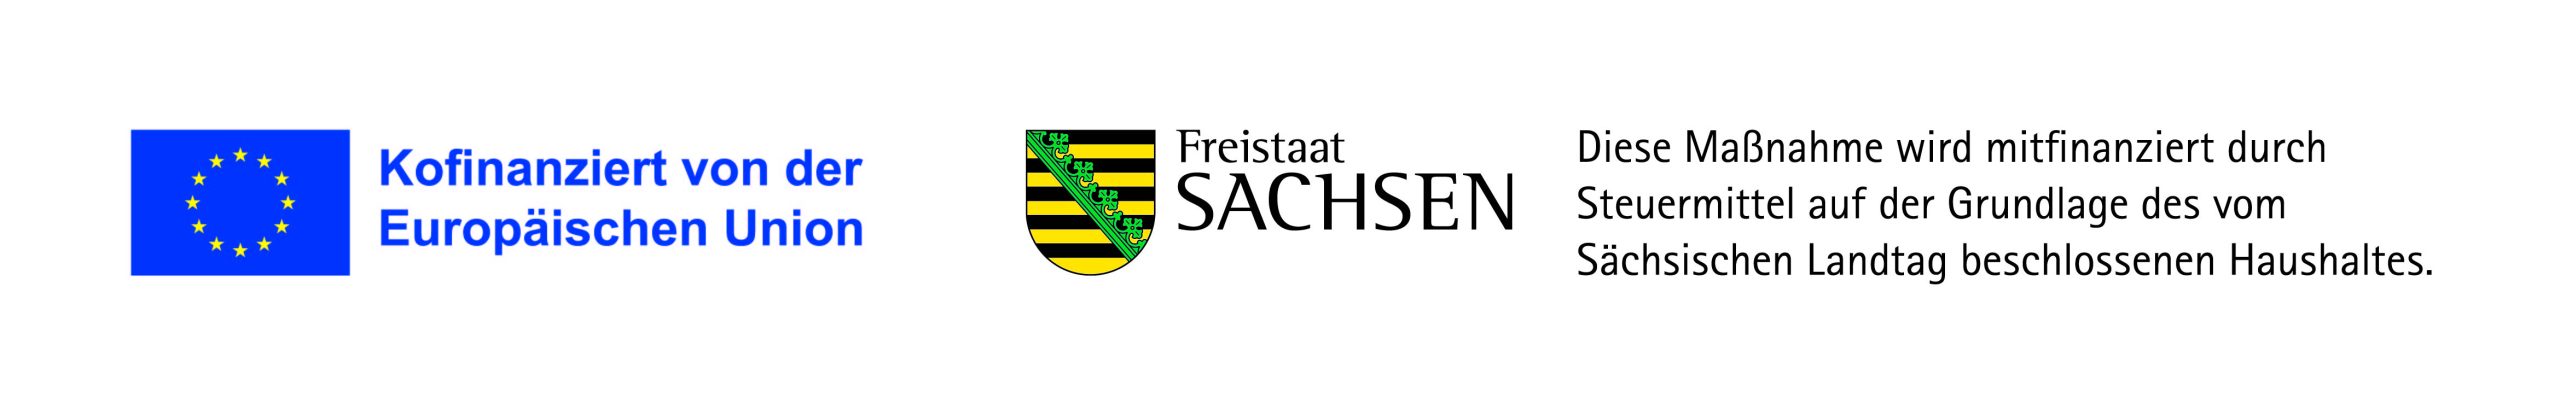 EFRE-ESF_LO_Kombination_EU-Logo_FreistaatSachsen_H_CMYK_600dpi